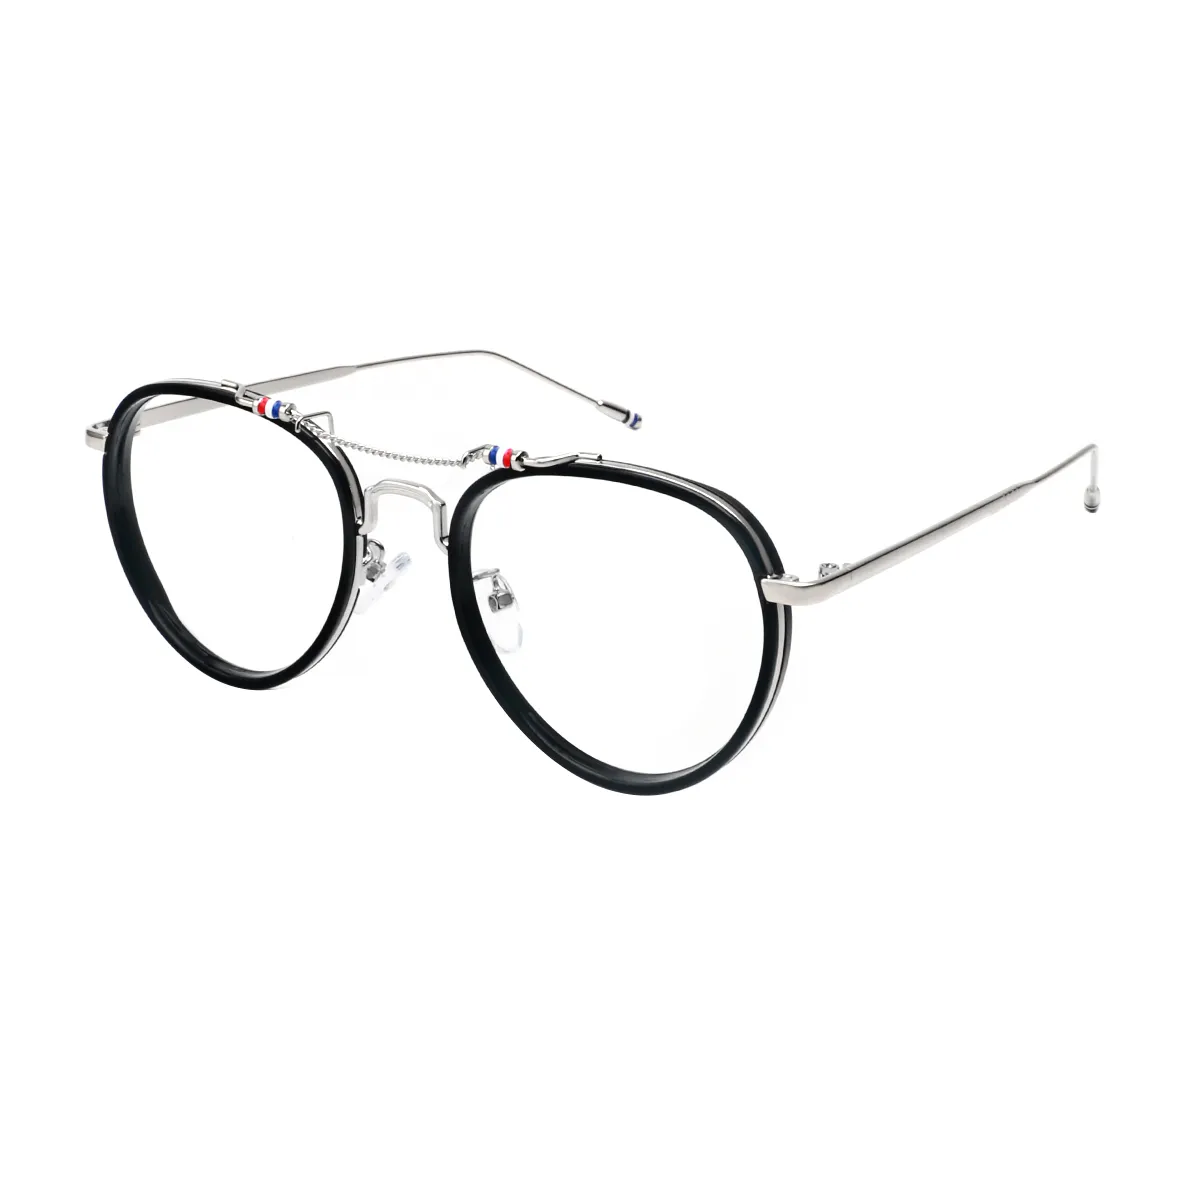 Delia - Oval Black-Argent Glasses for Women